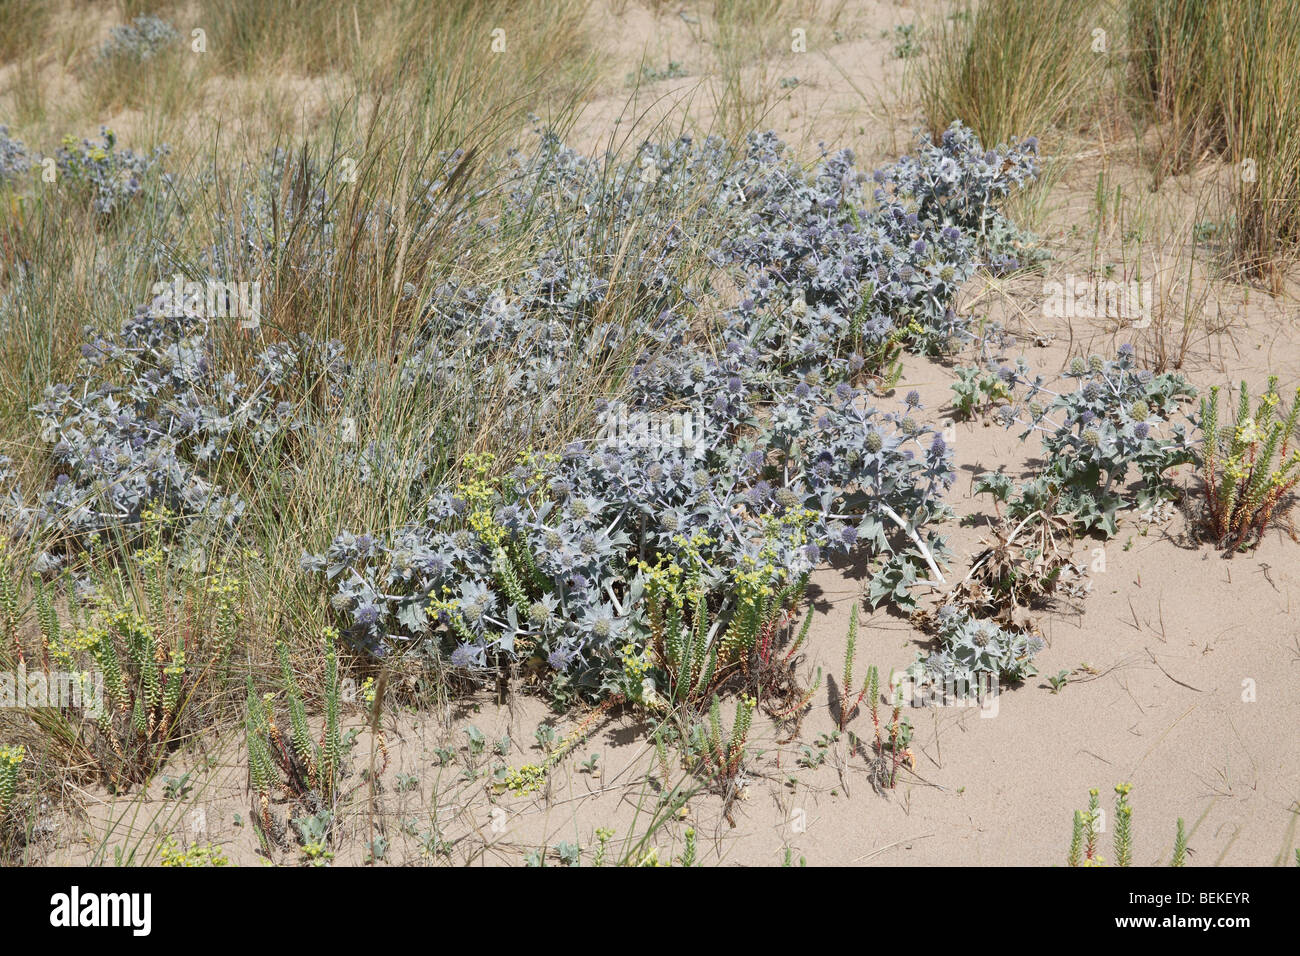 Sea holly (Eryngium maritimum) plants in flower on dunes Stock Photo